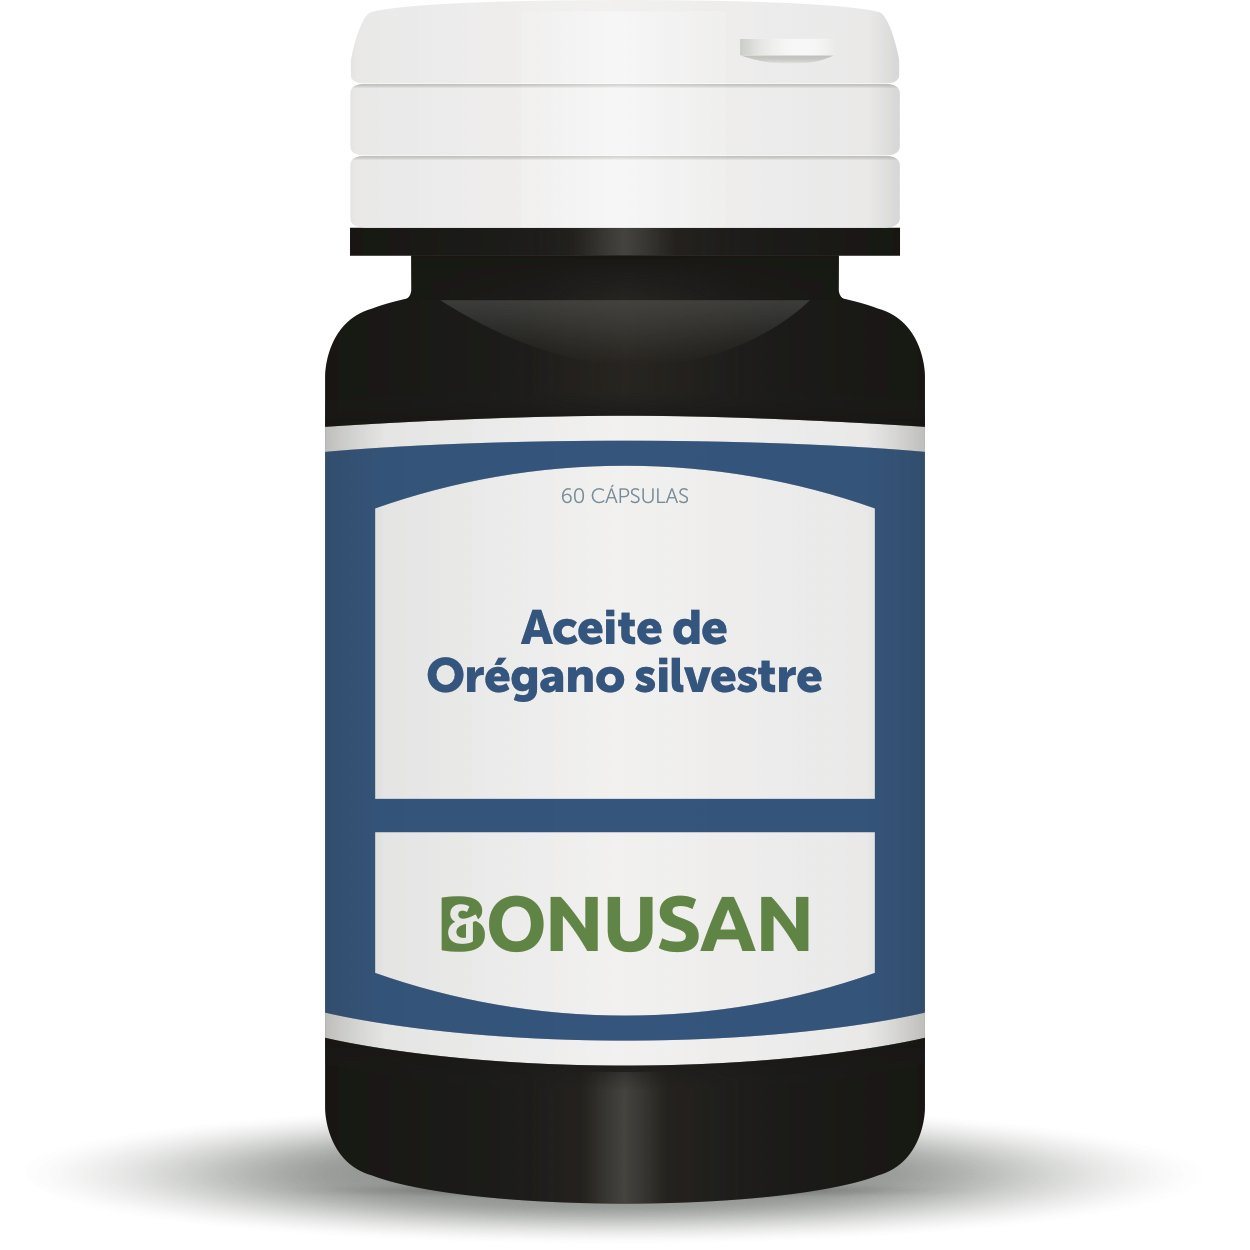 Aceite de Oregano Silvestre 60 Capsulas | Bonusan - Dietetica Ferrer